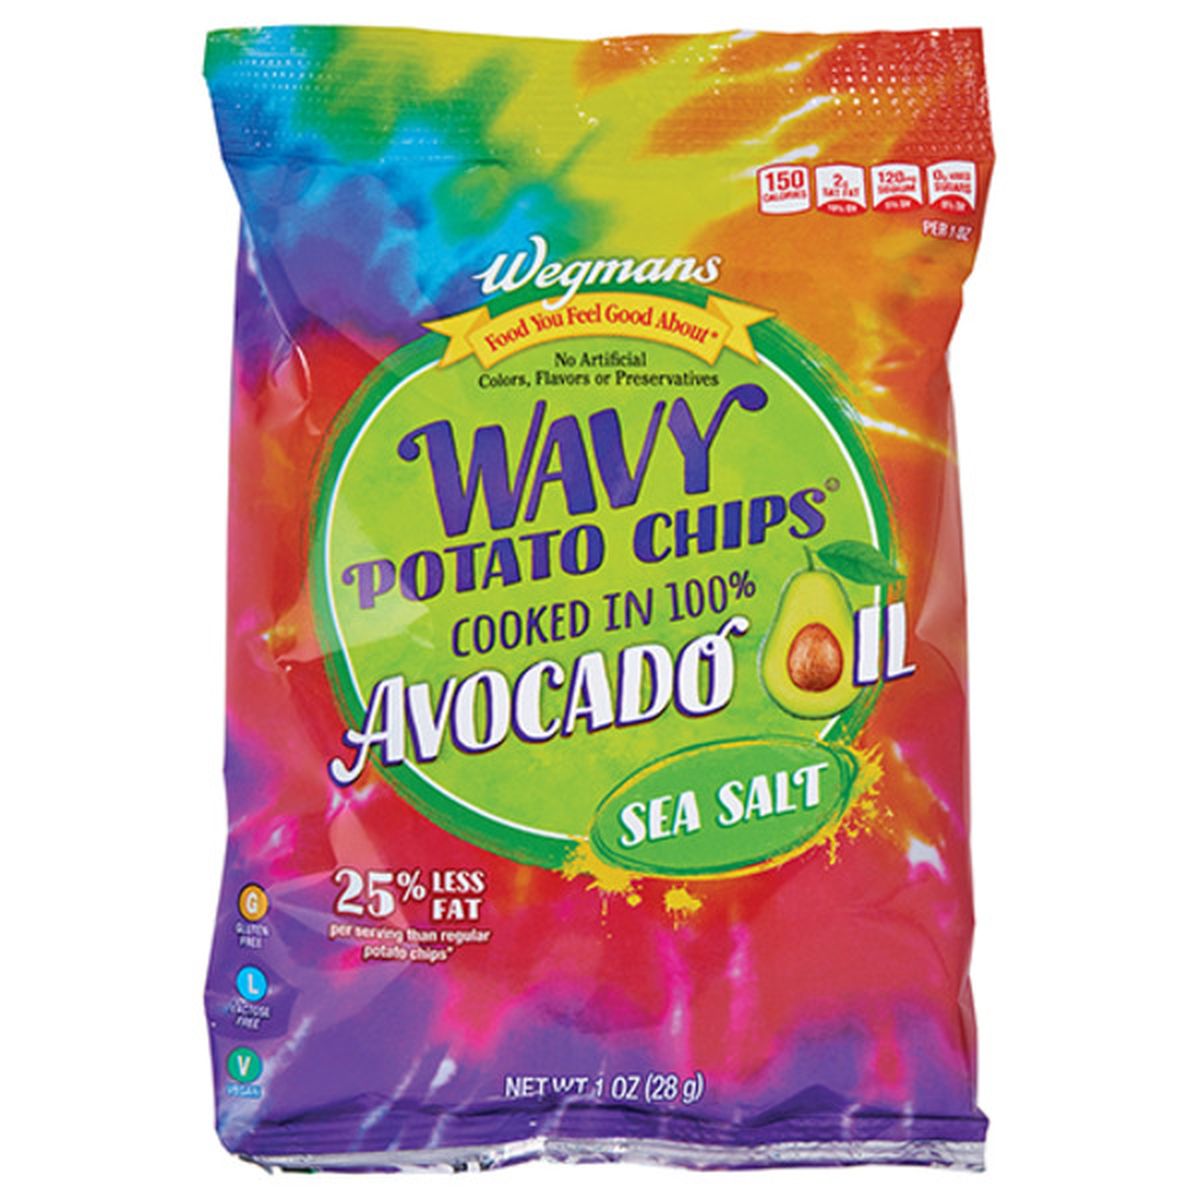 Calories in Wegmans Wavy Sea Salt Potato Chips Cooked in 100% Avocado Oil